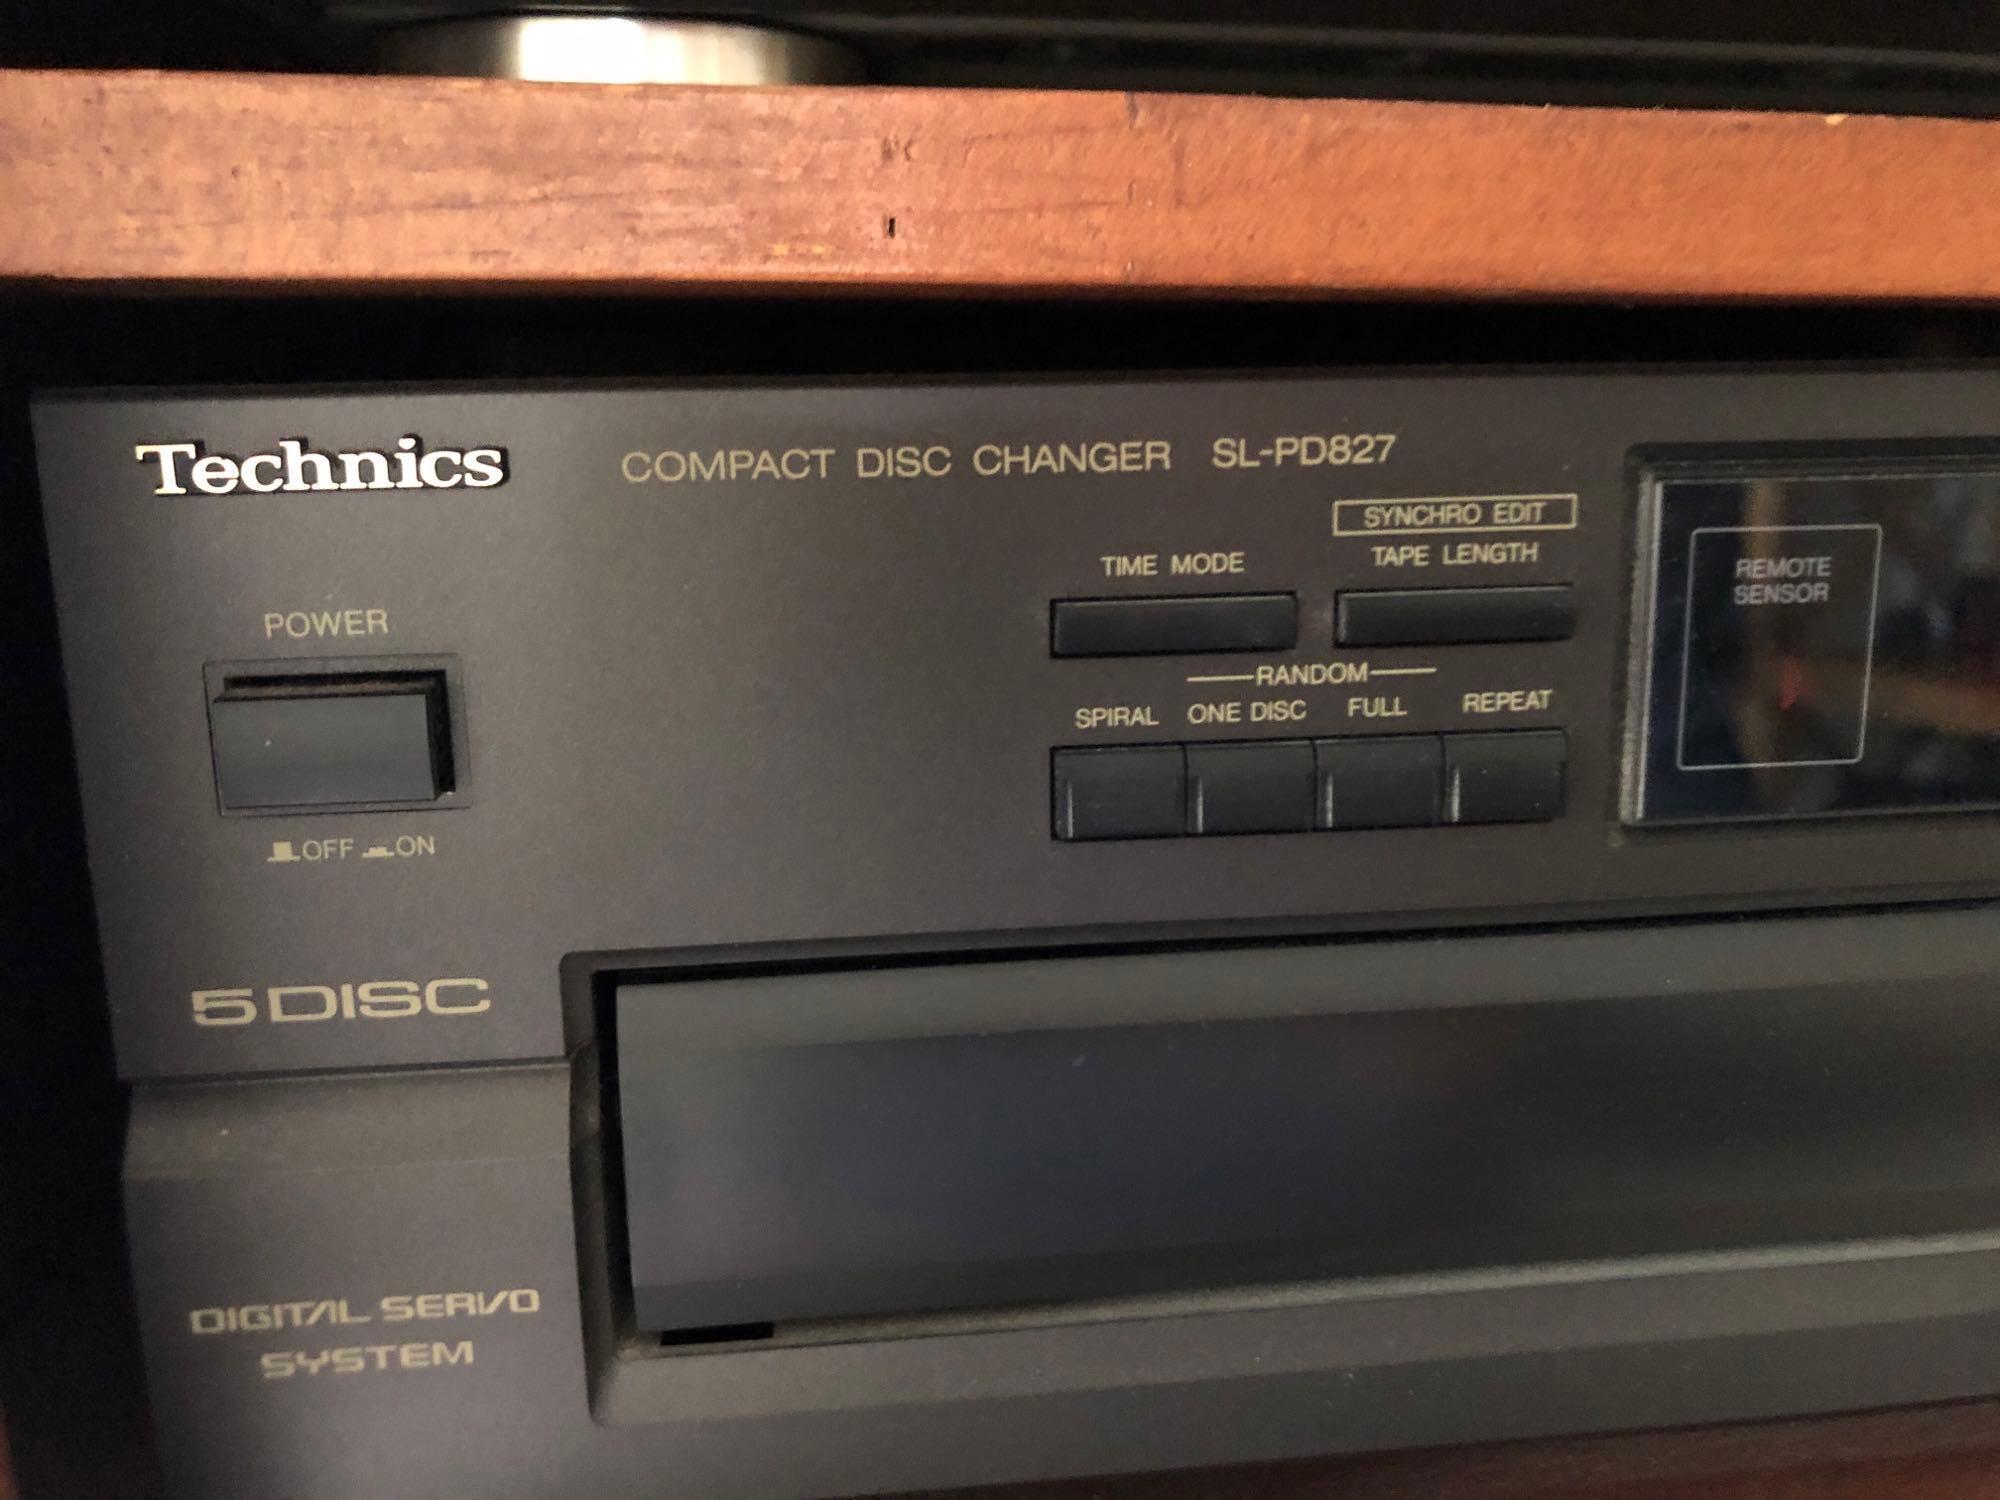 Technics Double Cassette Player, Compact Disc Changer, Denon Stereo Receiver